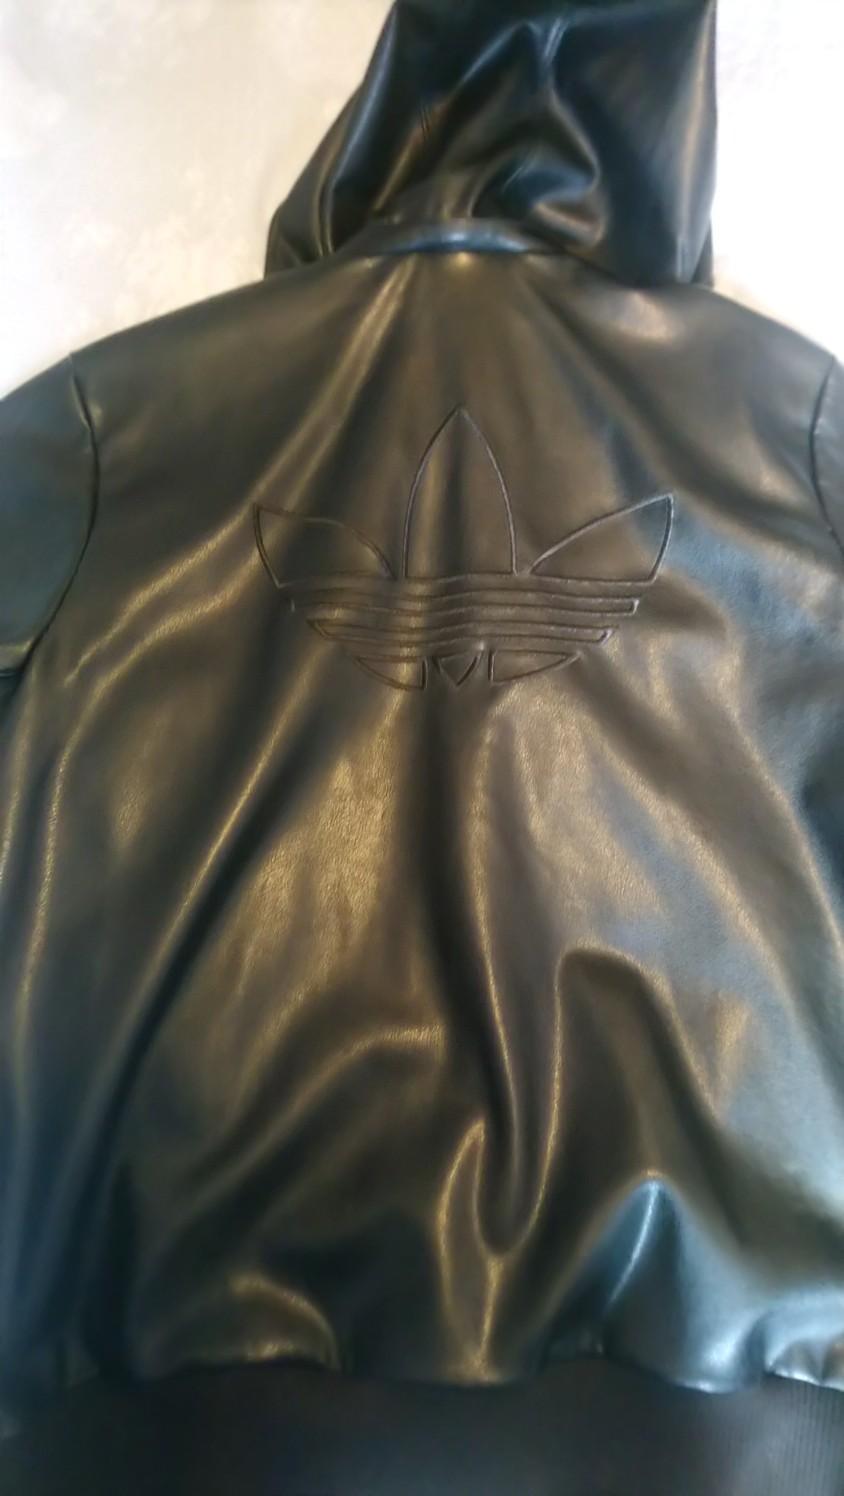 adidas hooded leather jacket